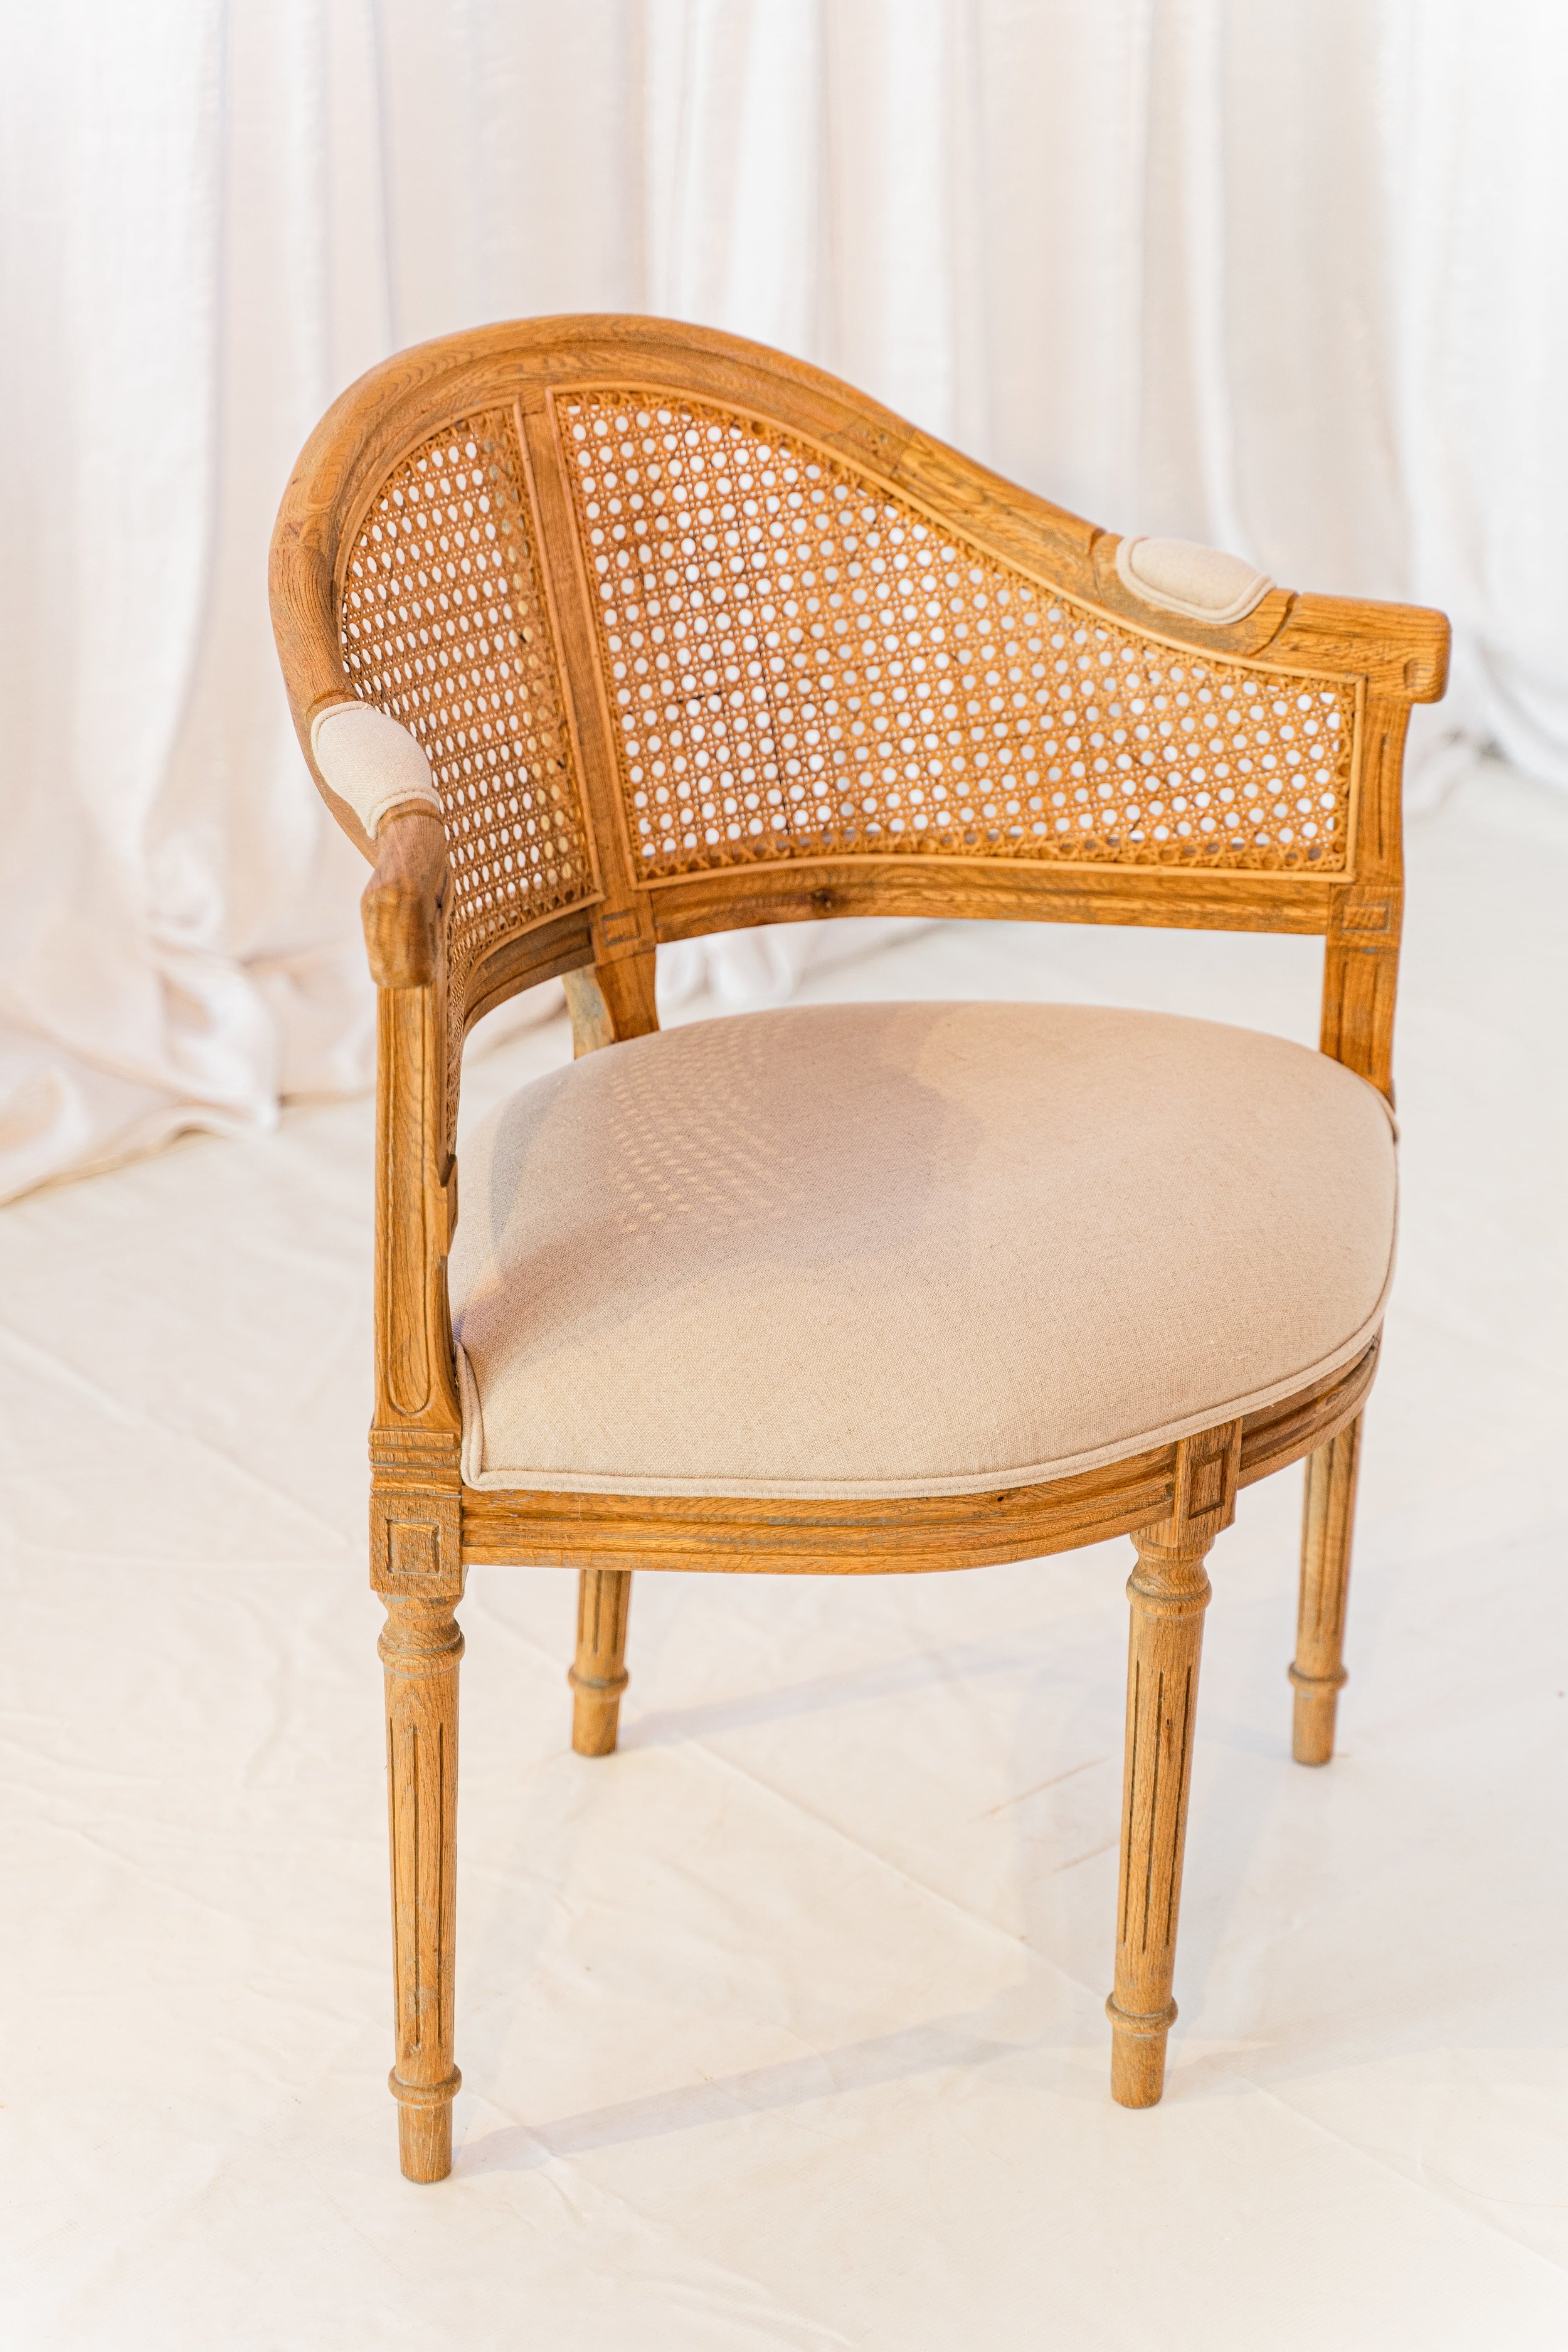 vintage chair images-24-min.jpg